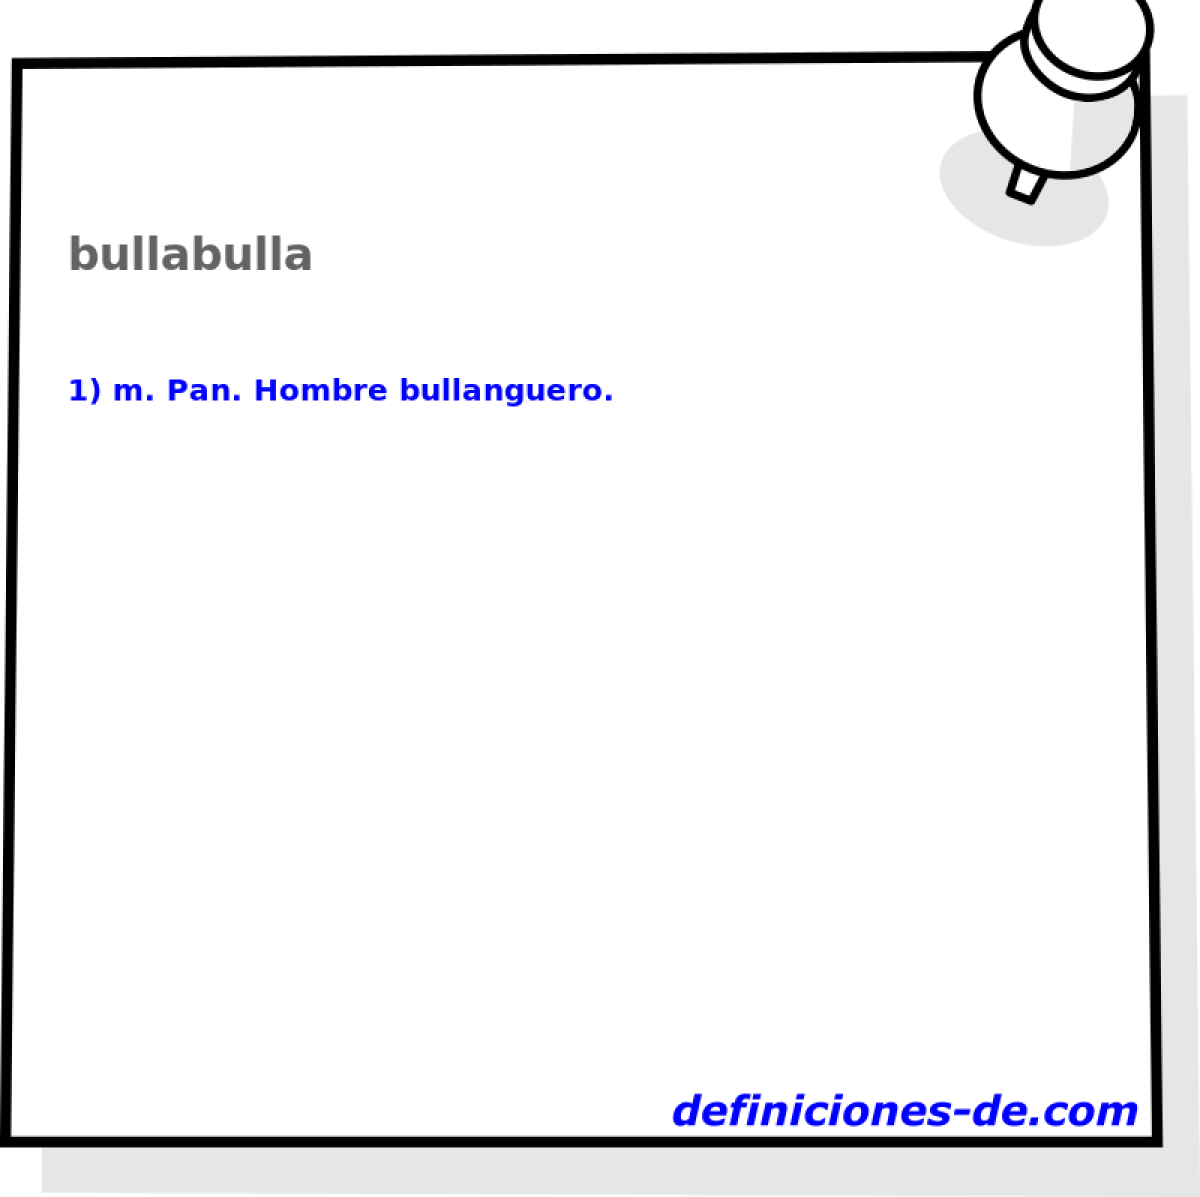 bullabulla 